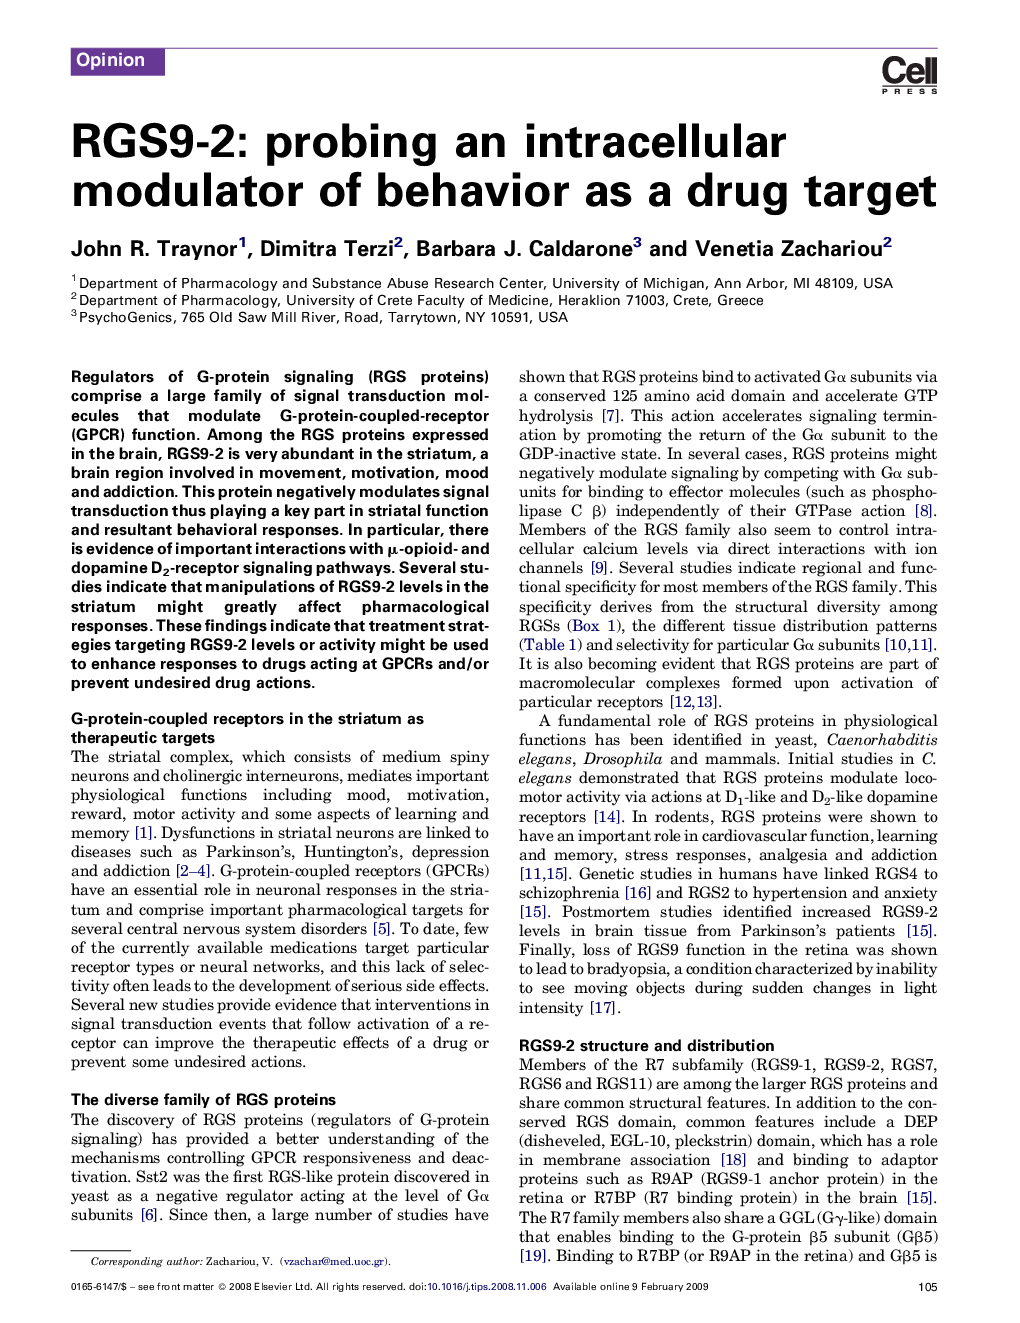 RGS9-2: probing an intracellular modulator of behavior as a drug target